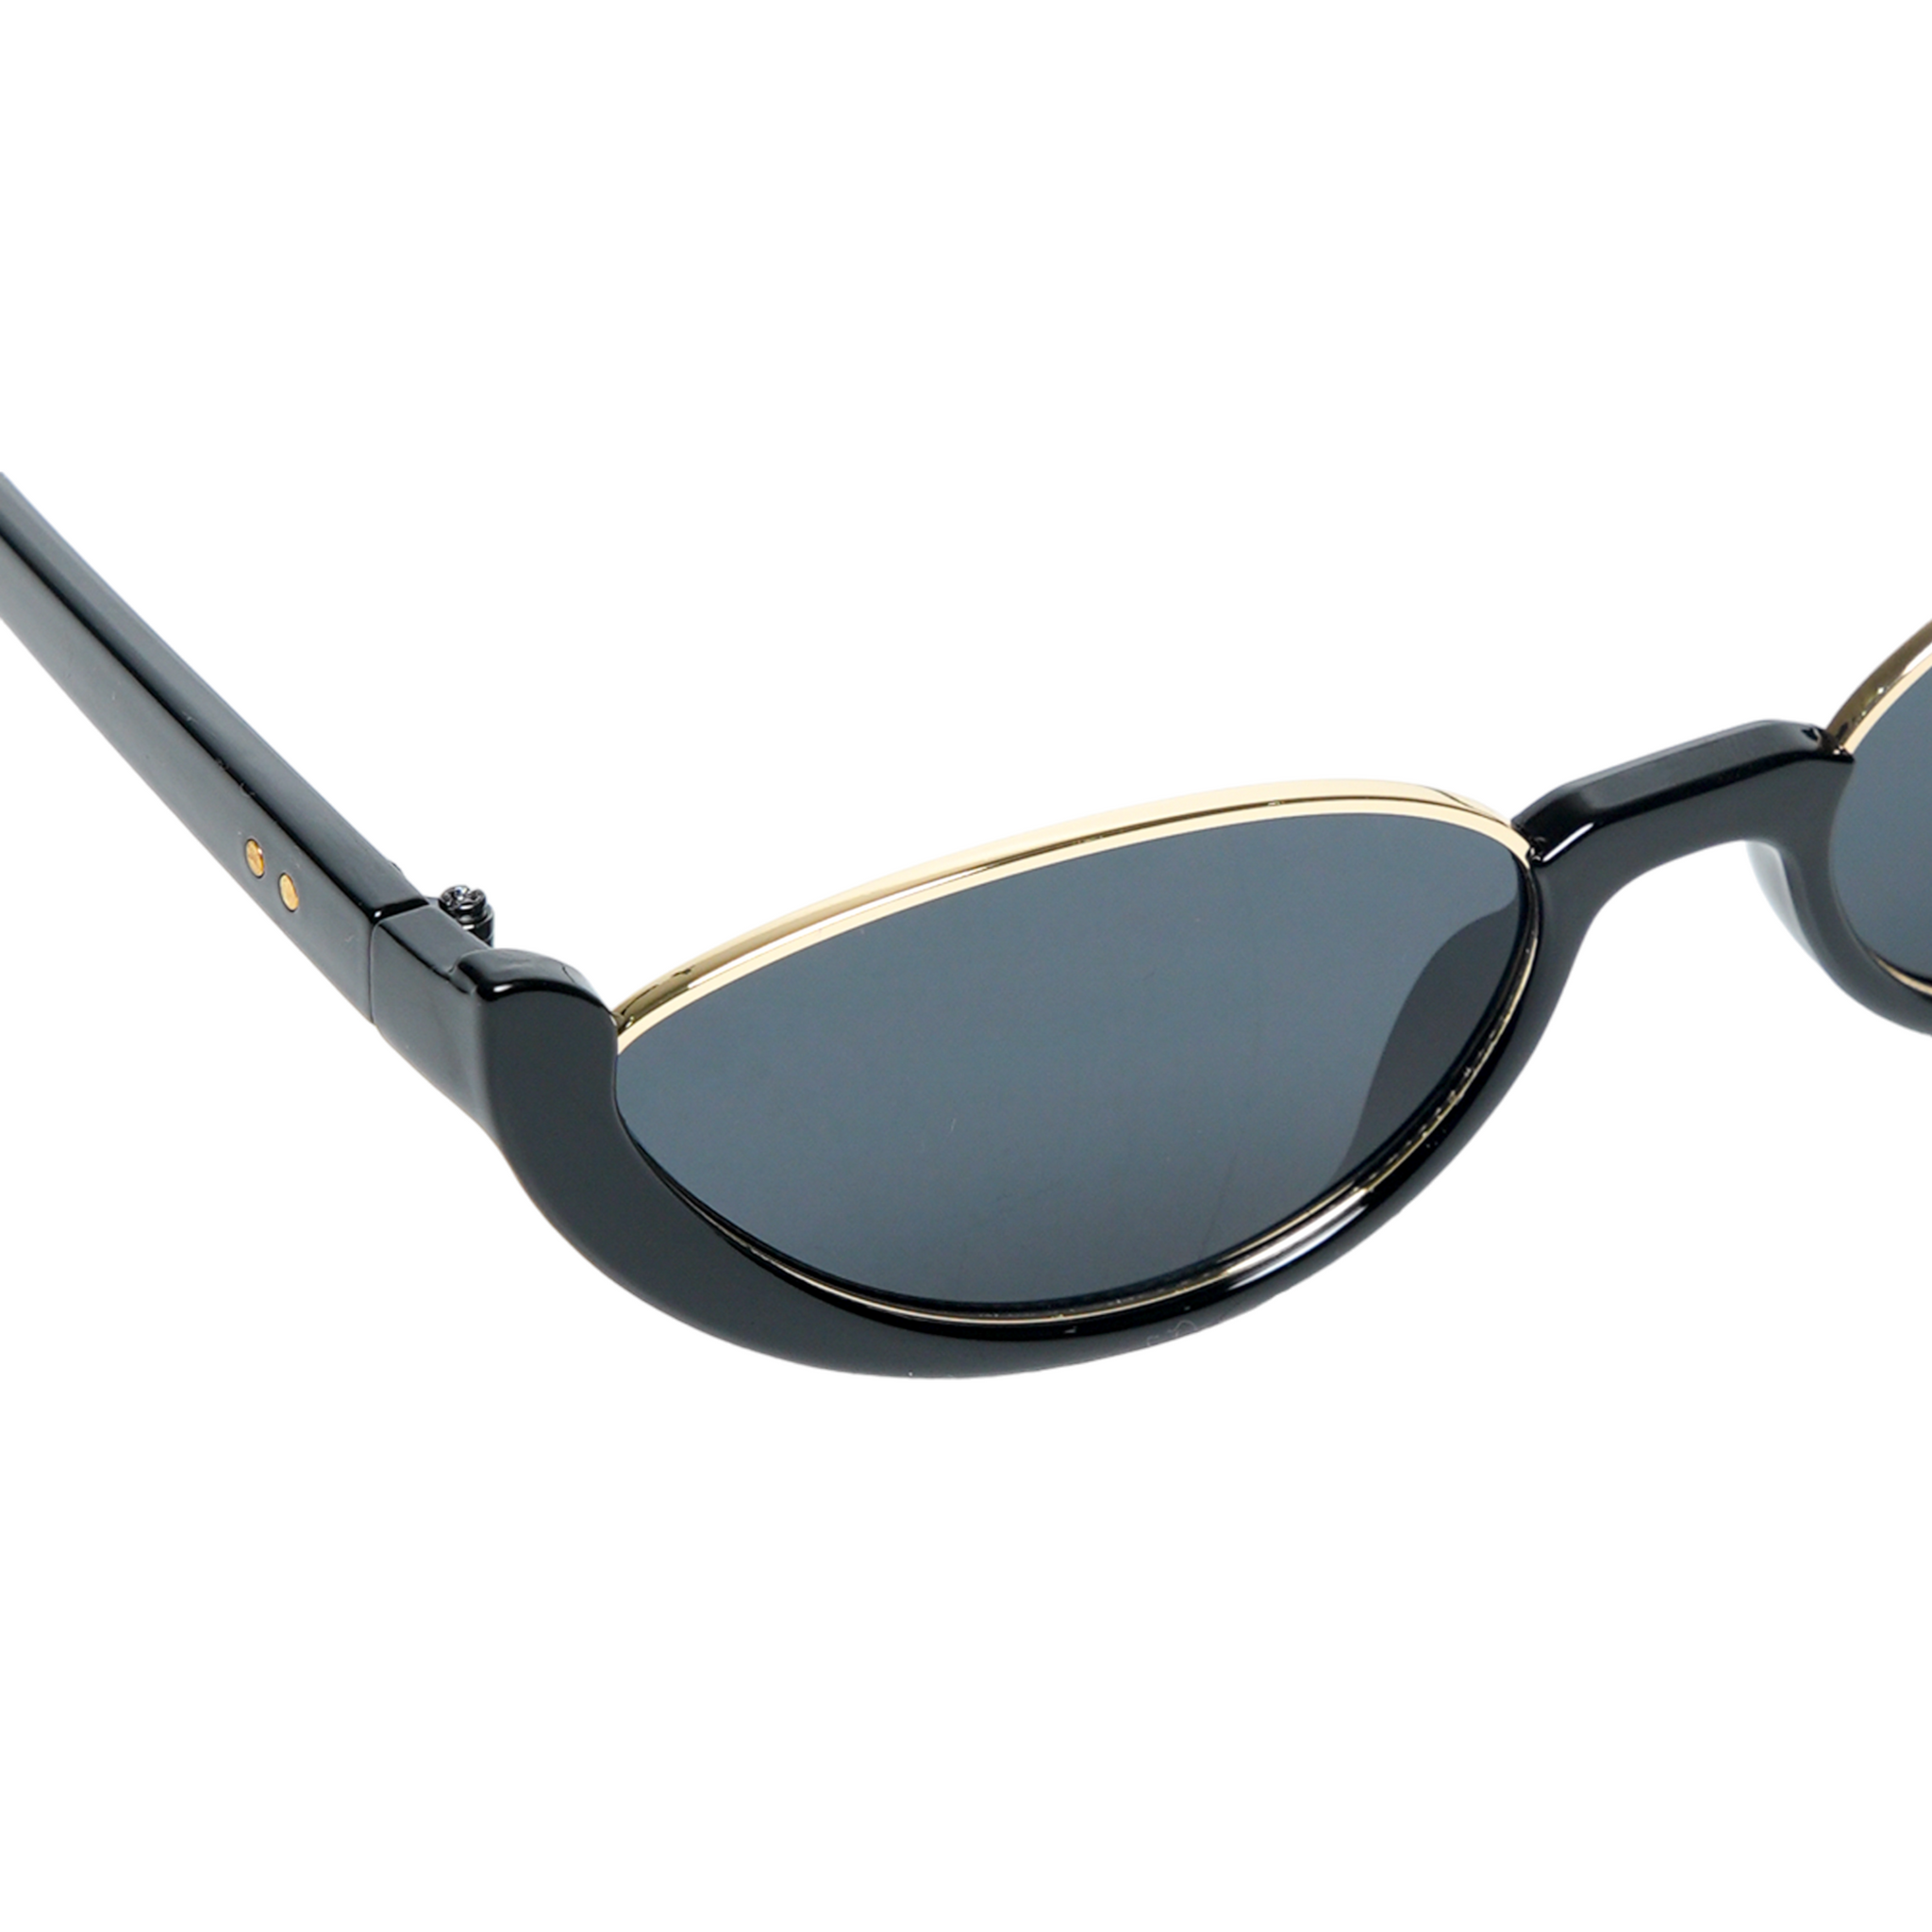 Chokore Half-frame Cat-eye Sunglasses (Black)